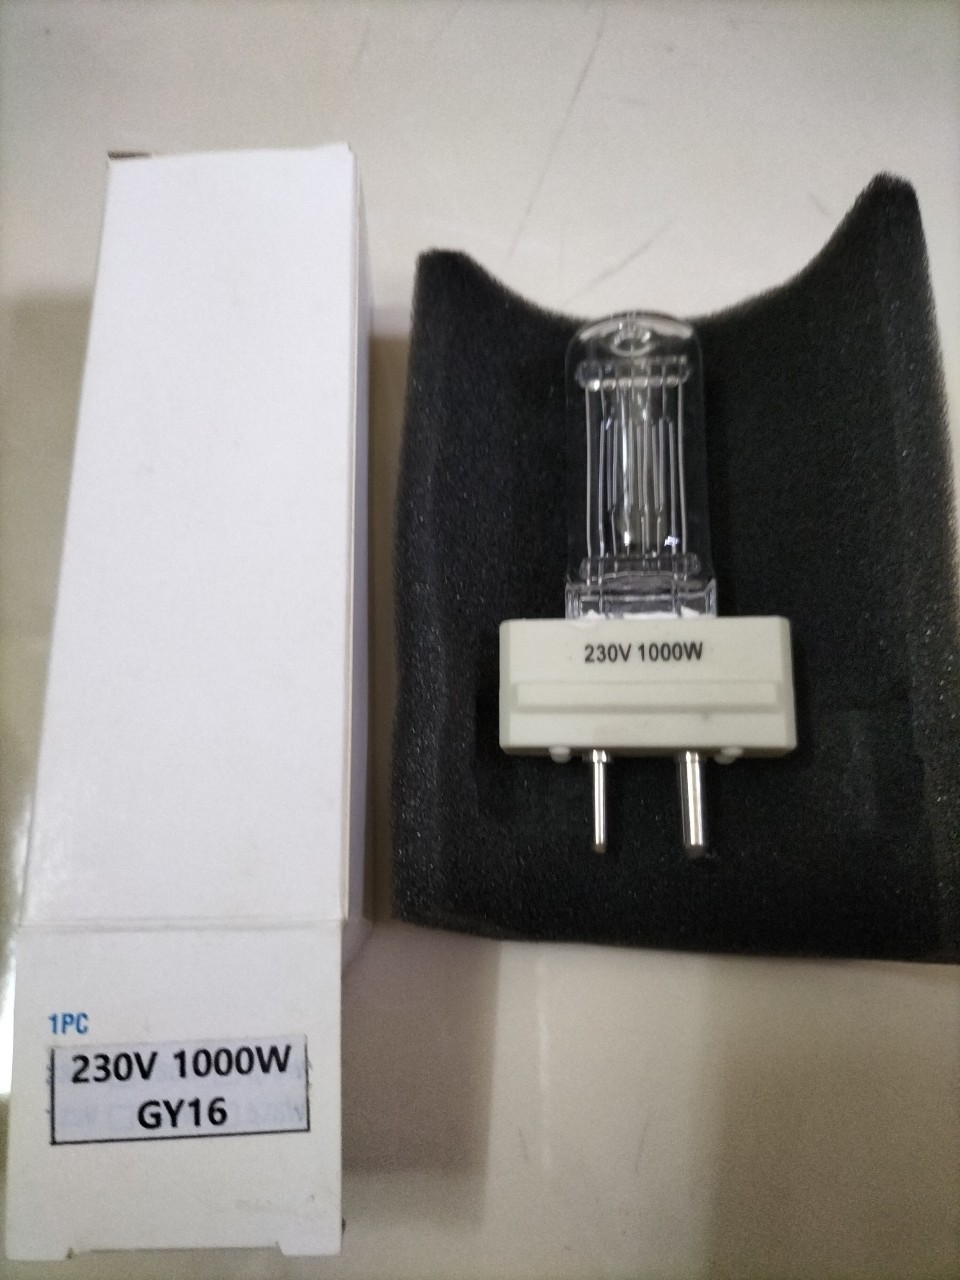 [HCM]Bóng đèn pha luồng GY16 230V 1000W (Marine halogen searchlight)